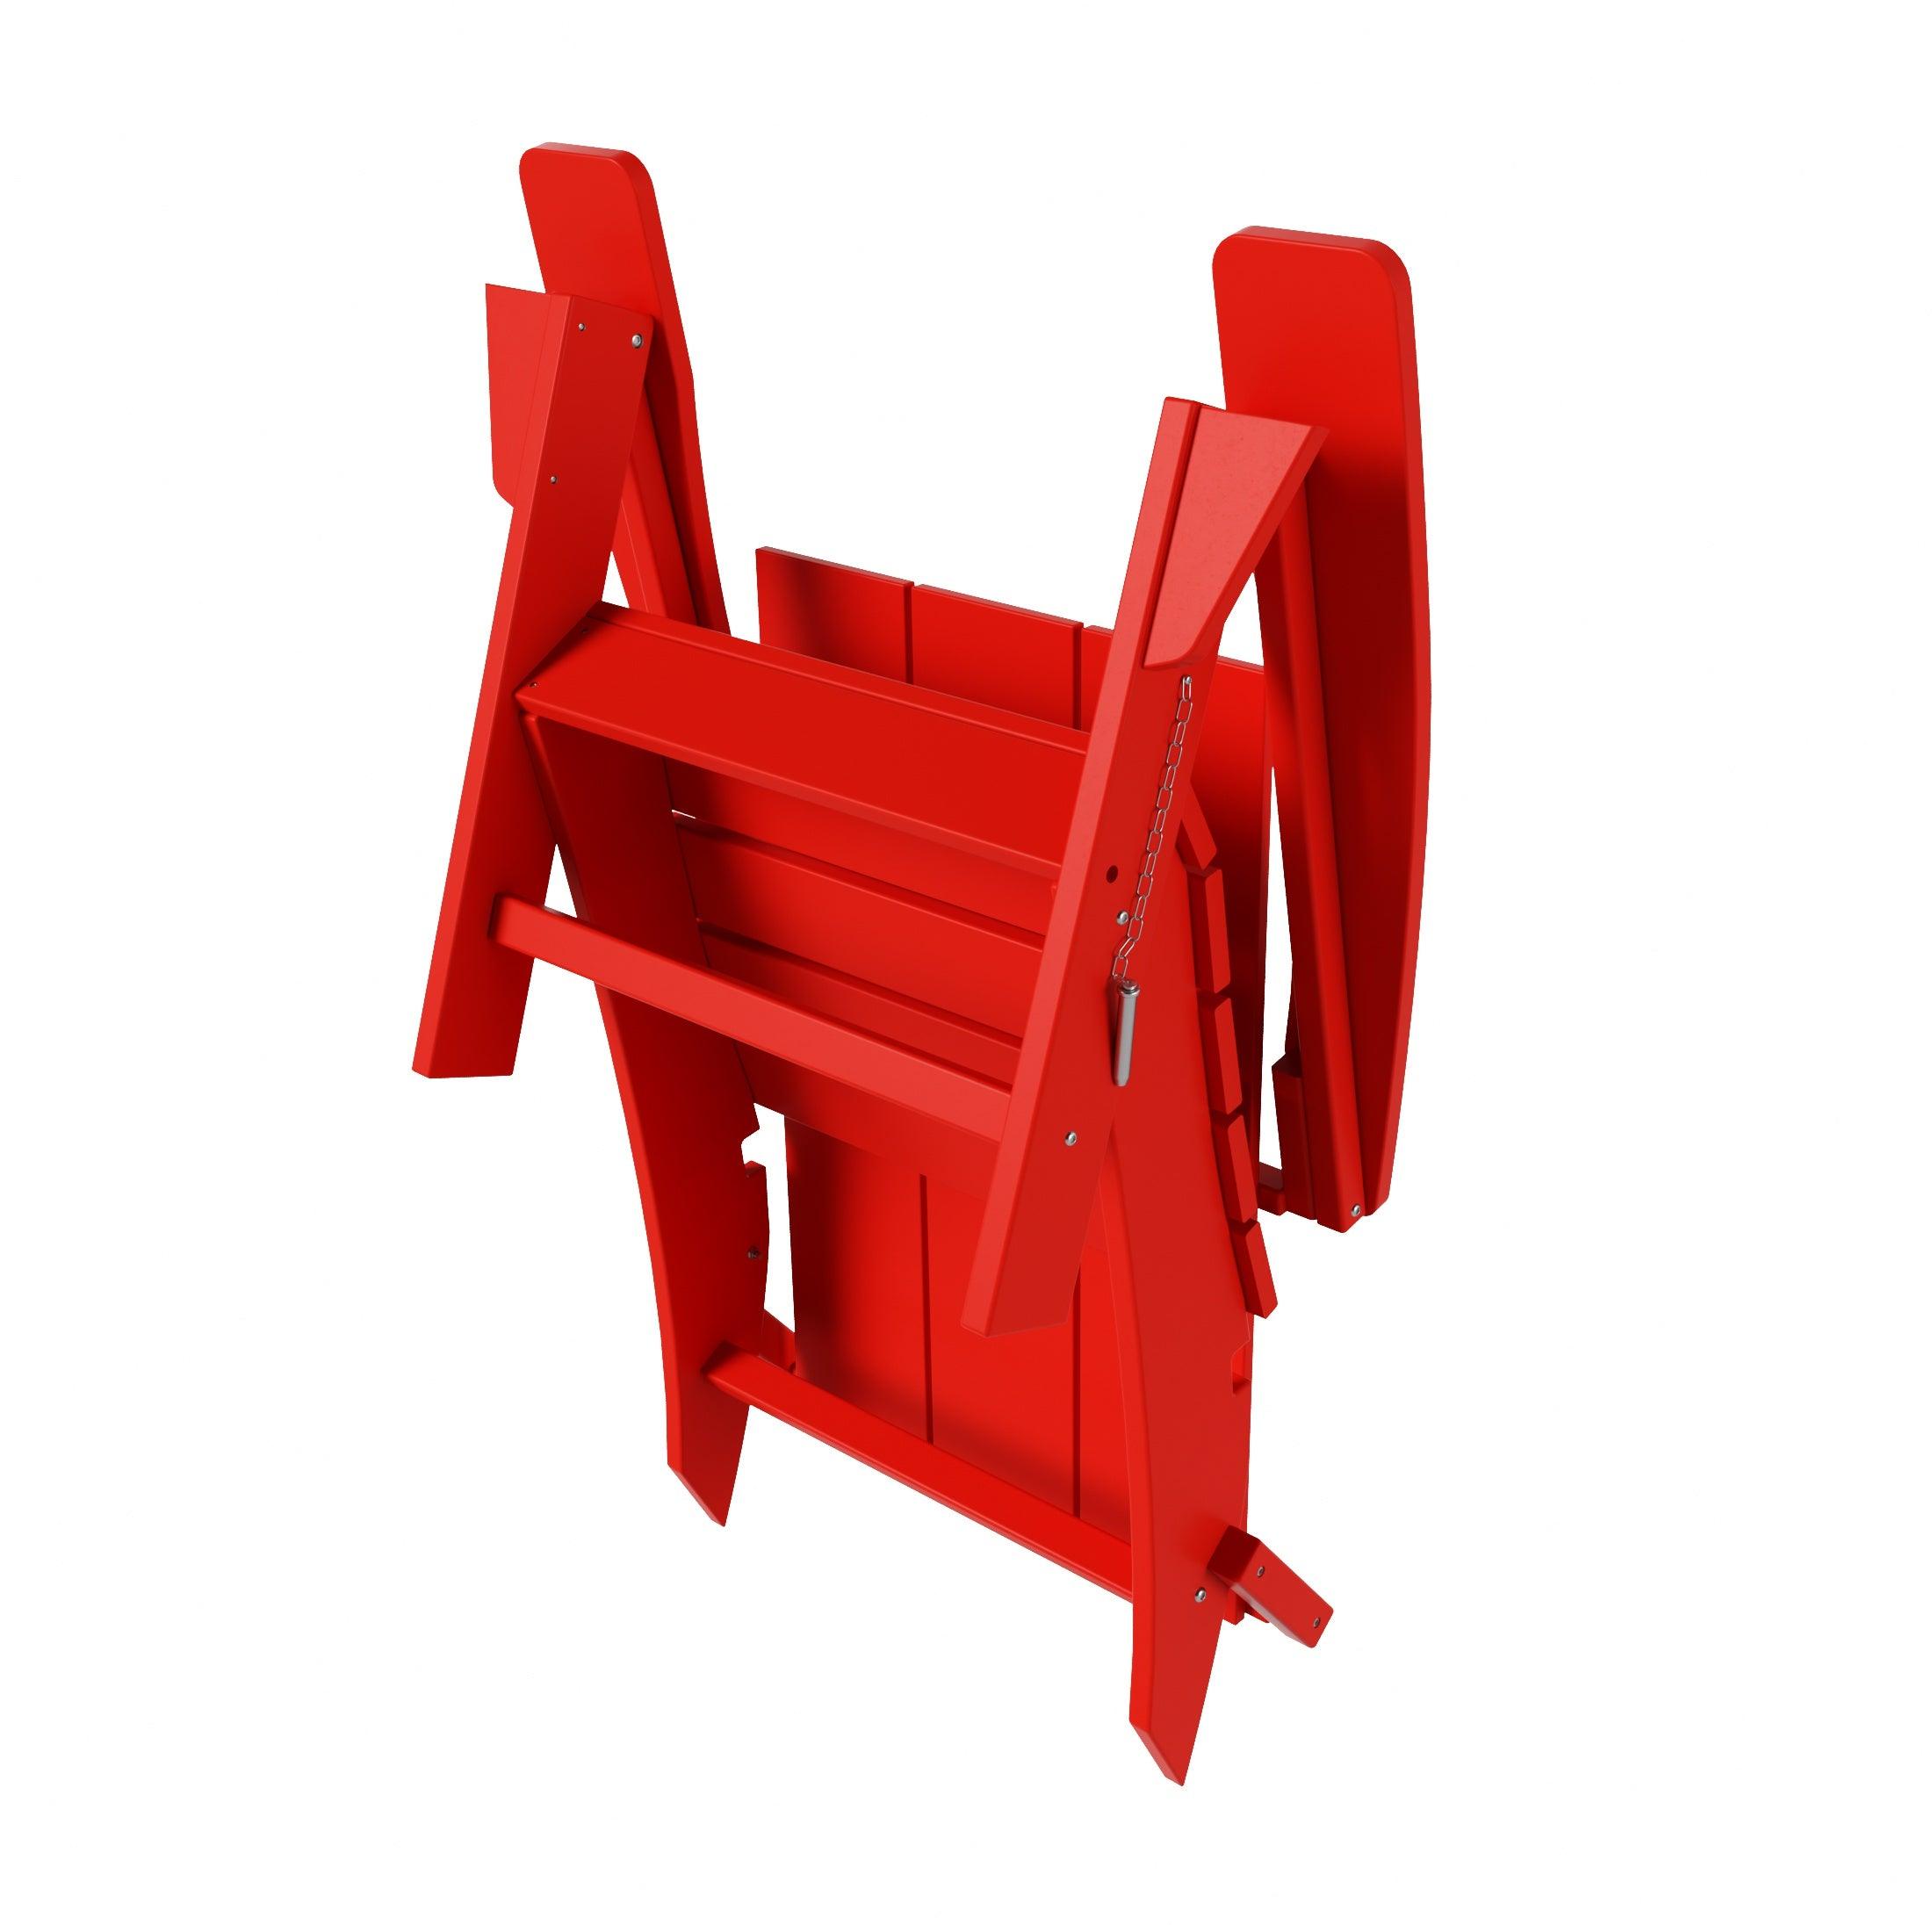 Palms Modern Folding Poly Adirondack Chair (Set of 4) - Costaelm